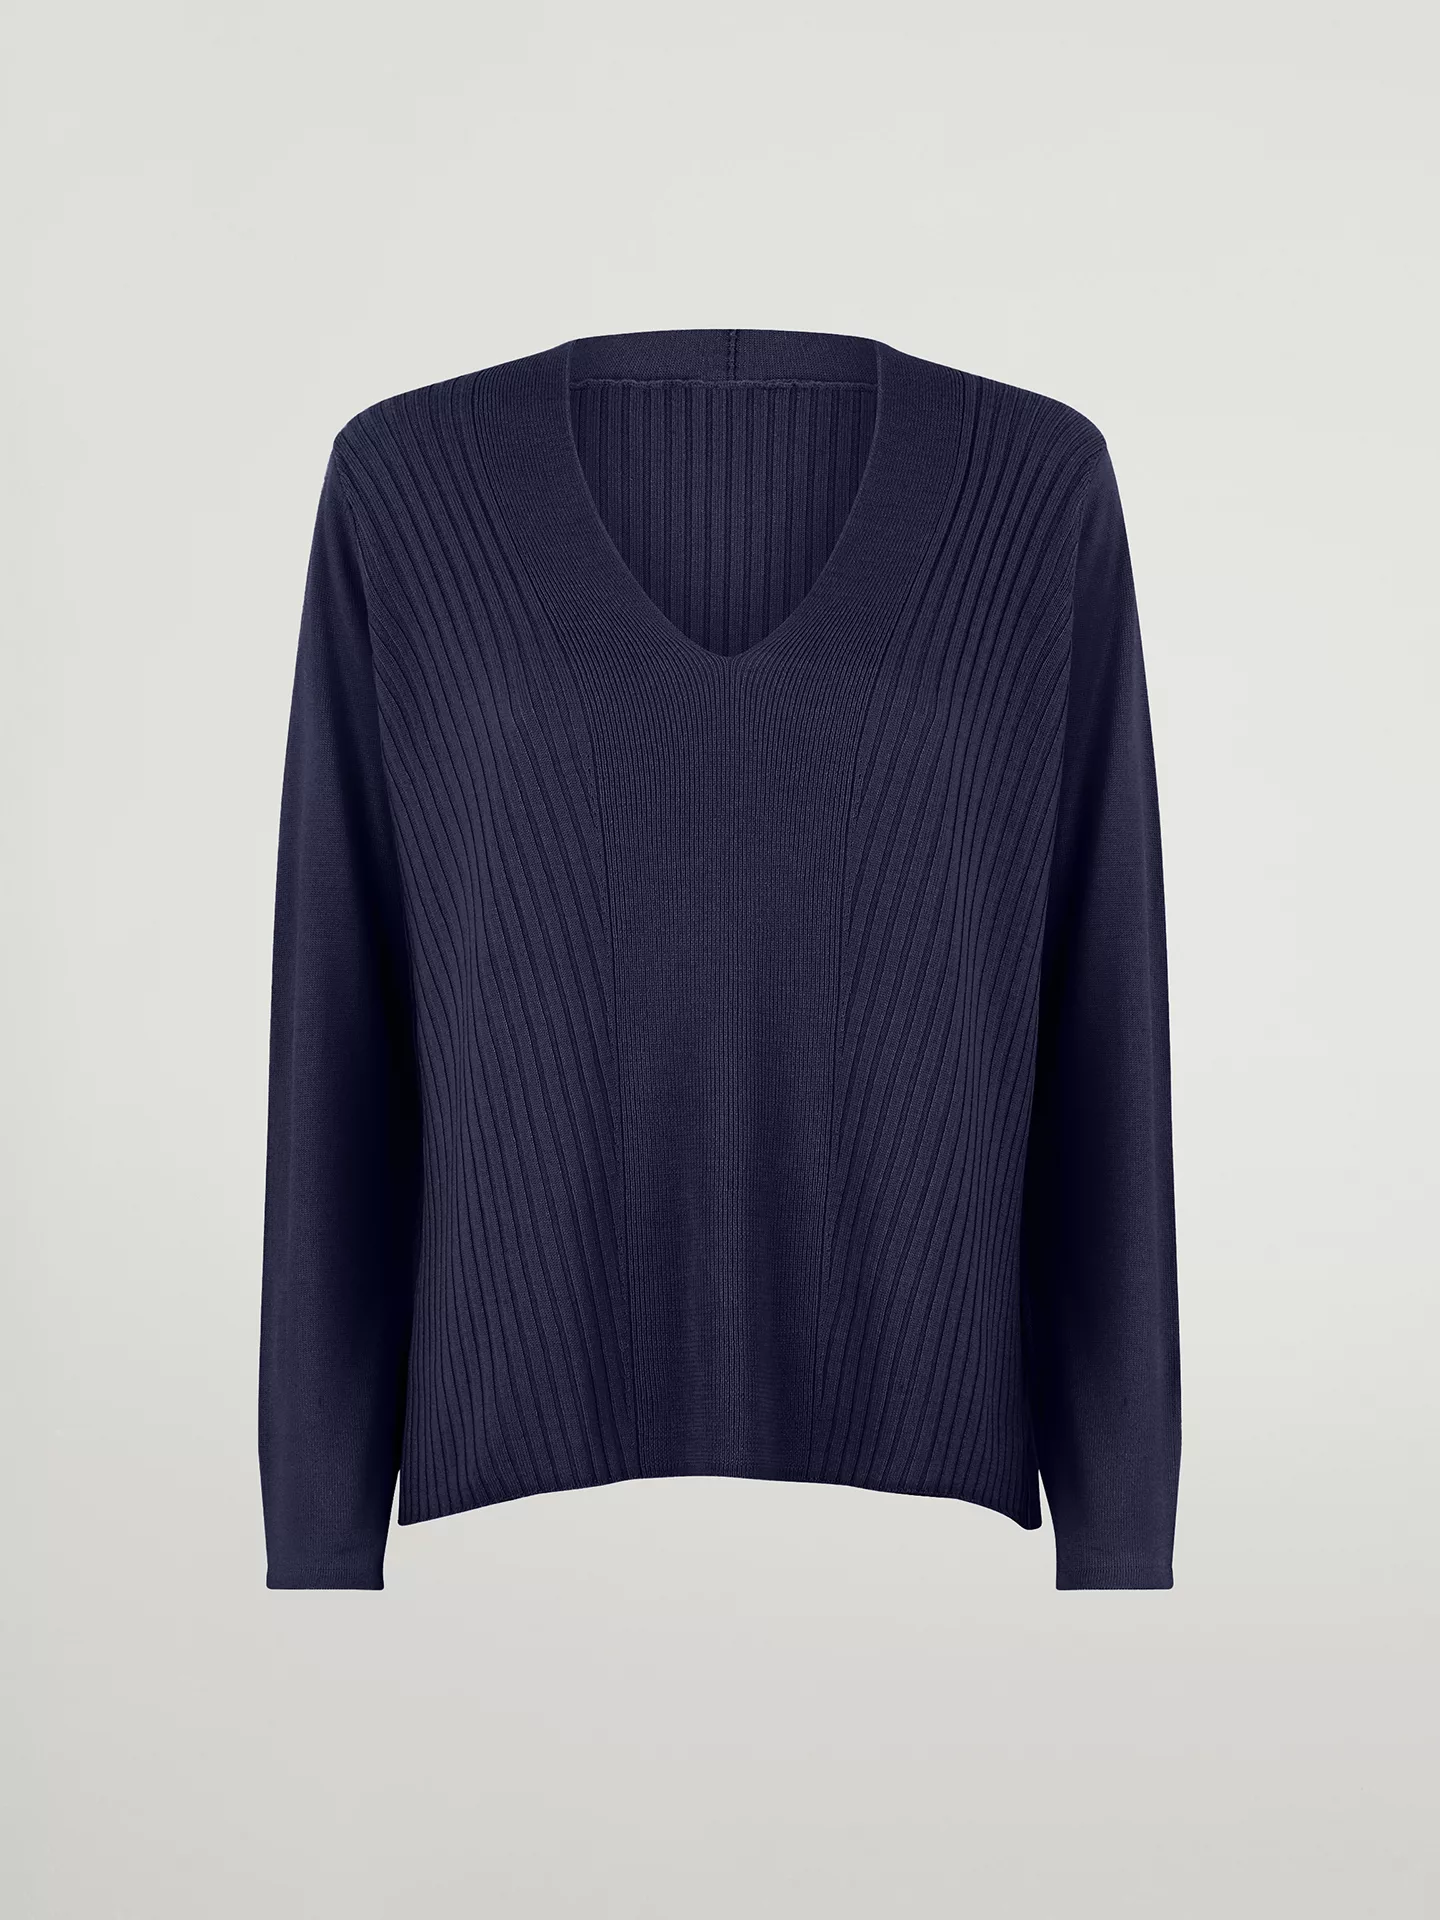 Wolford - Merino Blend Top Long Sleeves, Frau, saphire blue, Größe: XS günstig online kaufen